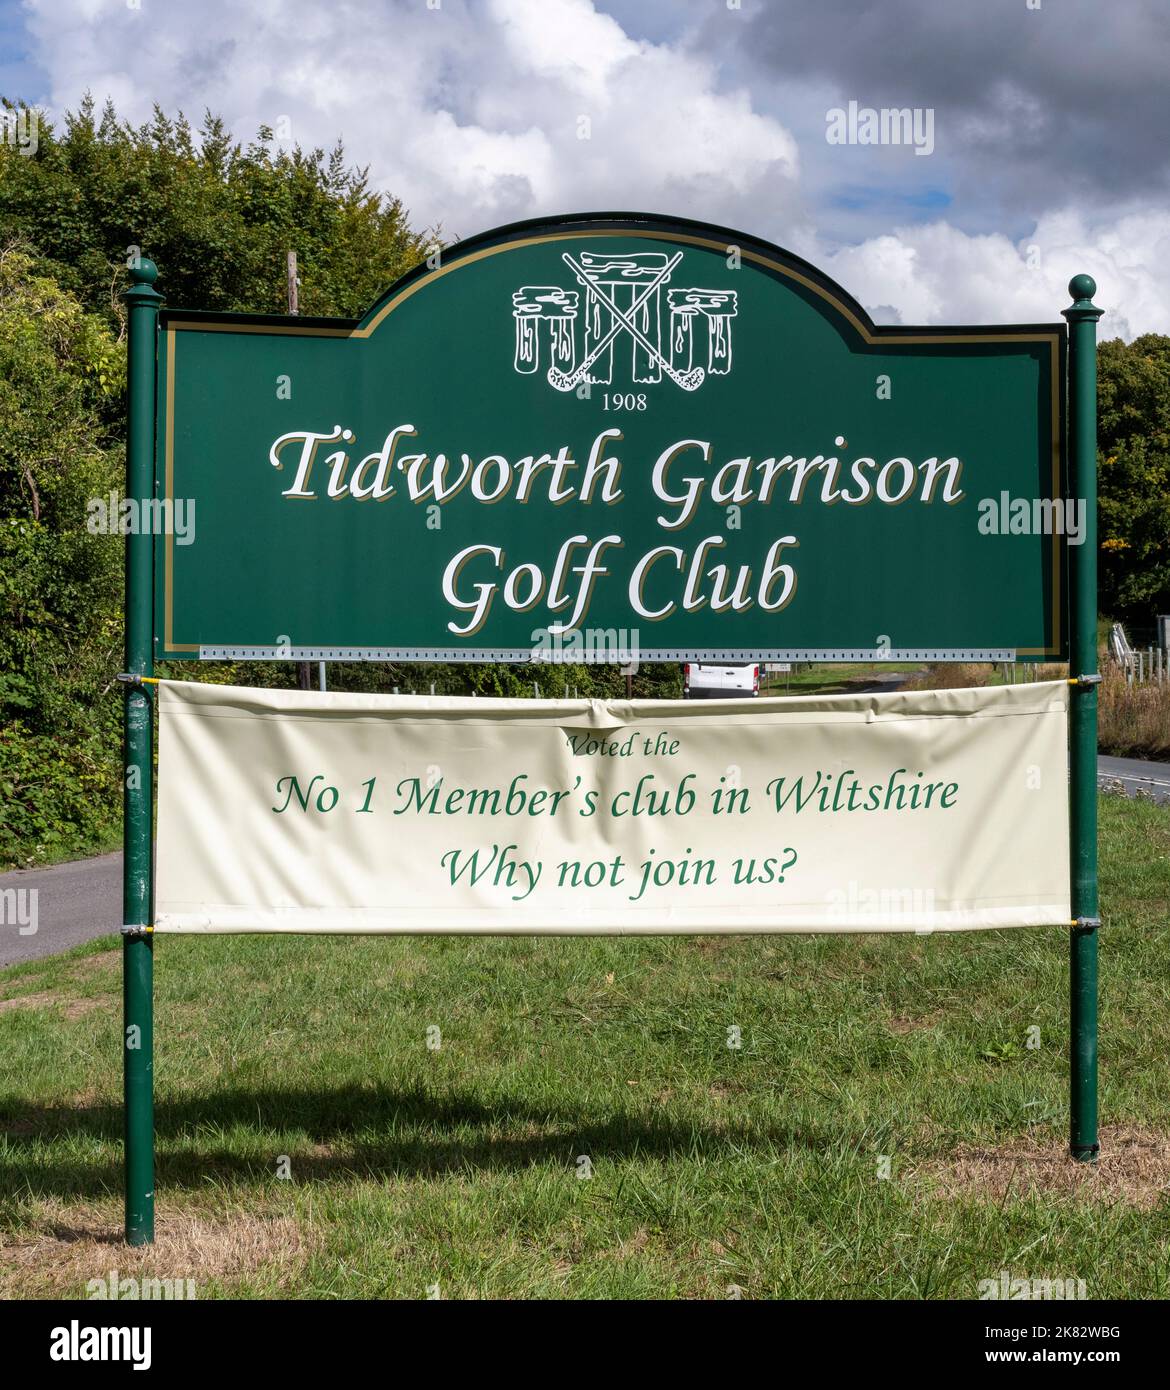 Tidworth Garrison Golf Club, Bulford Road, Tidworth, Wiltshire, England, UK - view of entrance welcome sign Stock Photo